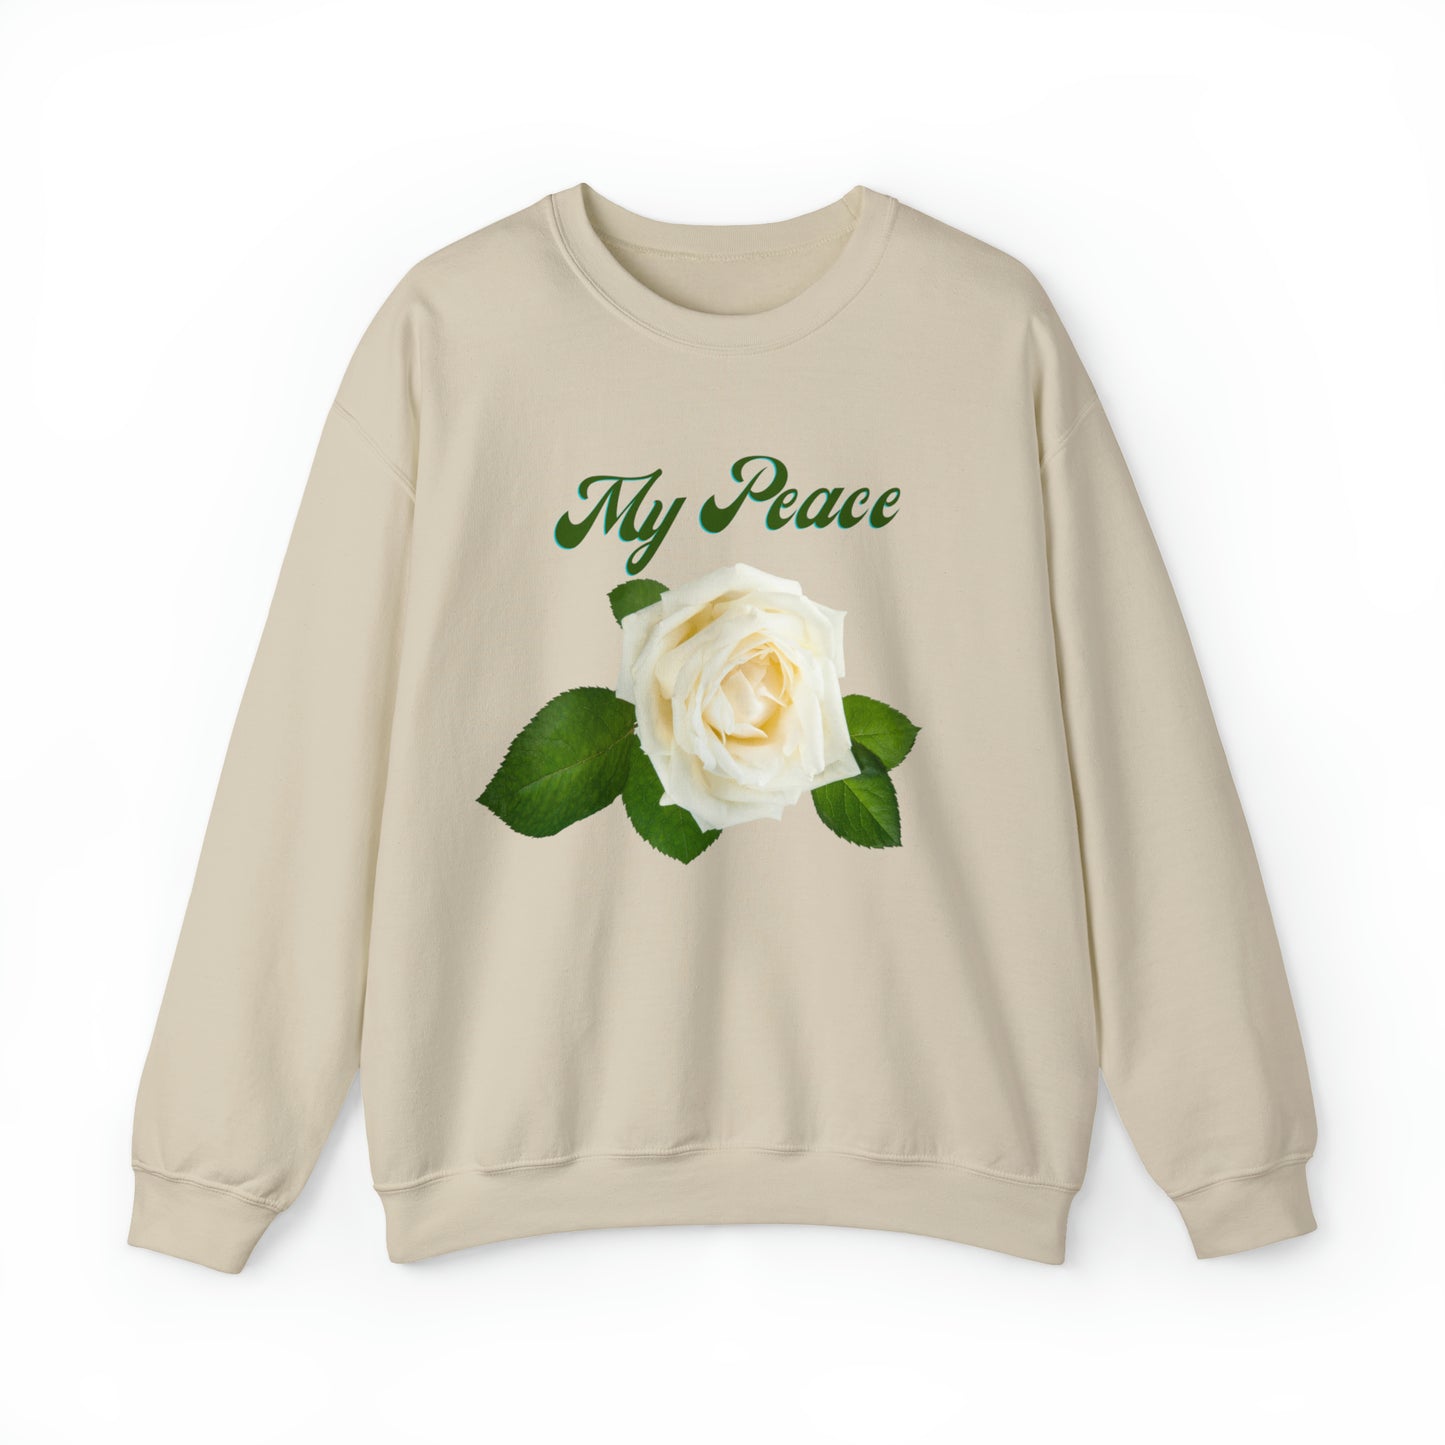 White Rose Design Statement Sweatshirt Gift